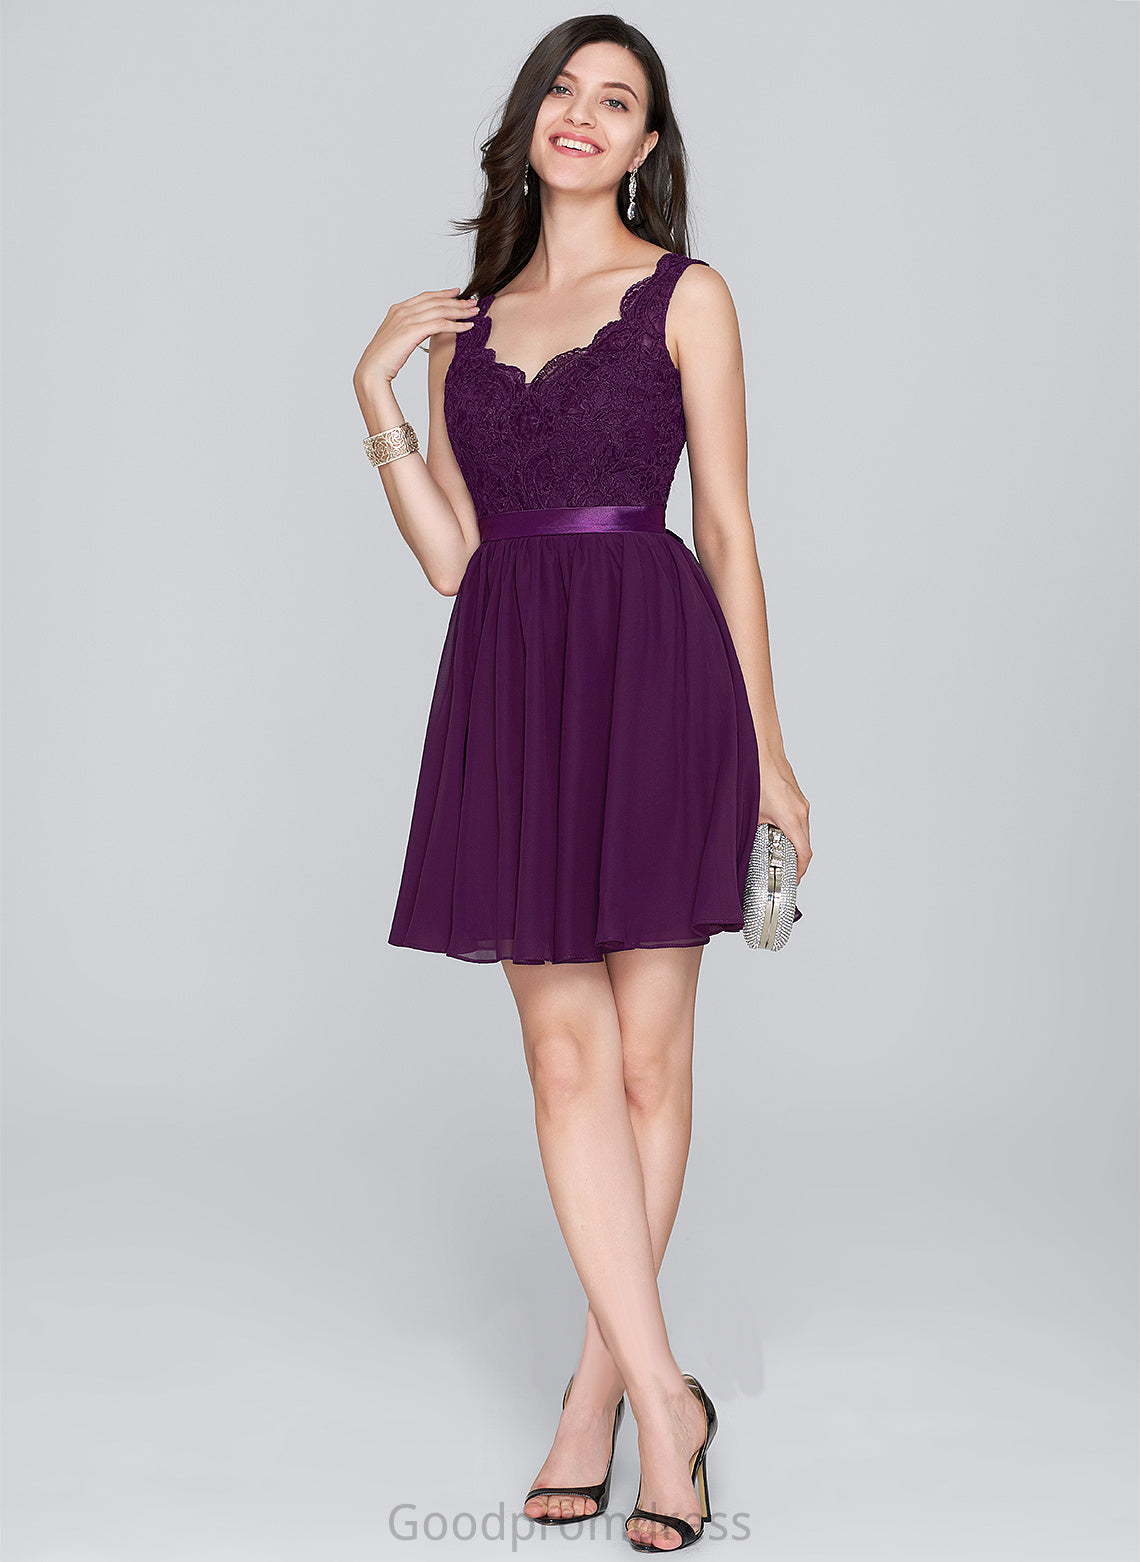 Chiffon Dress Lace Homecoming Dresses V-neck Caroline Short/Mini Homecoming With A-Line Bow(s)